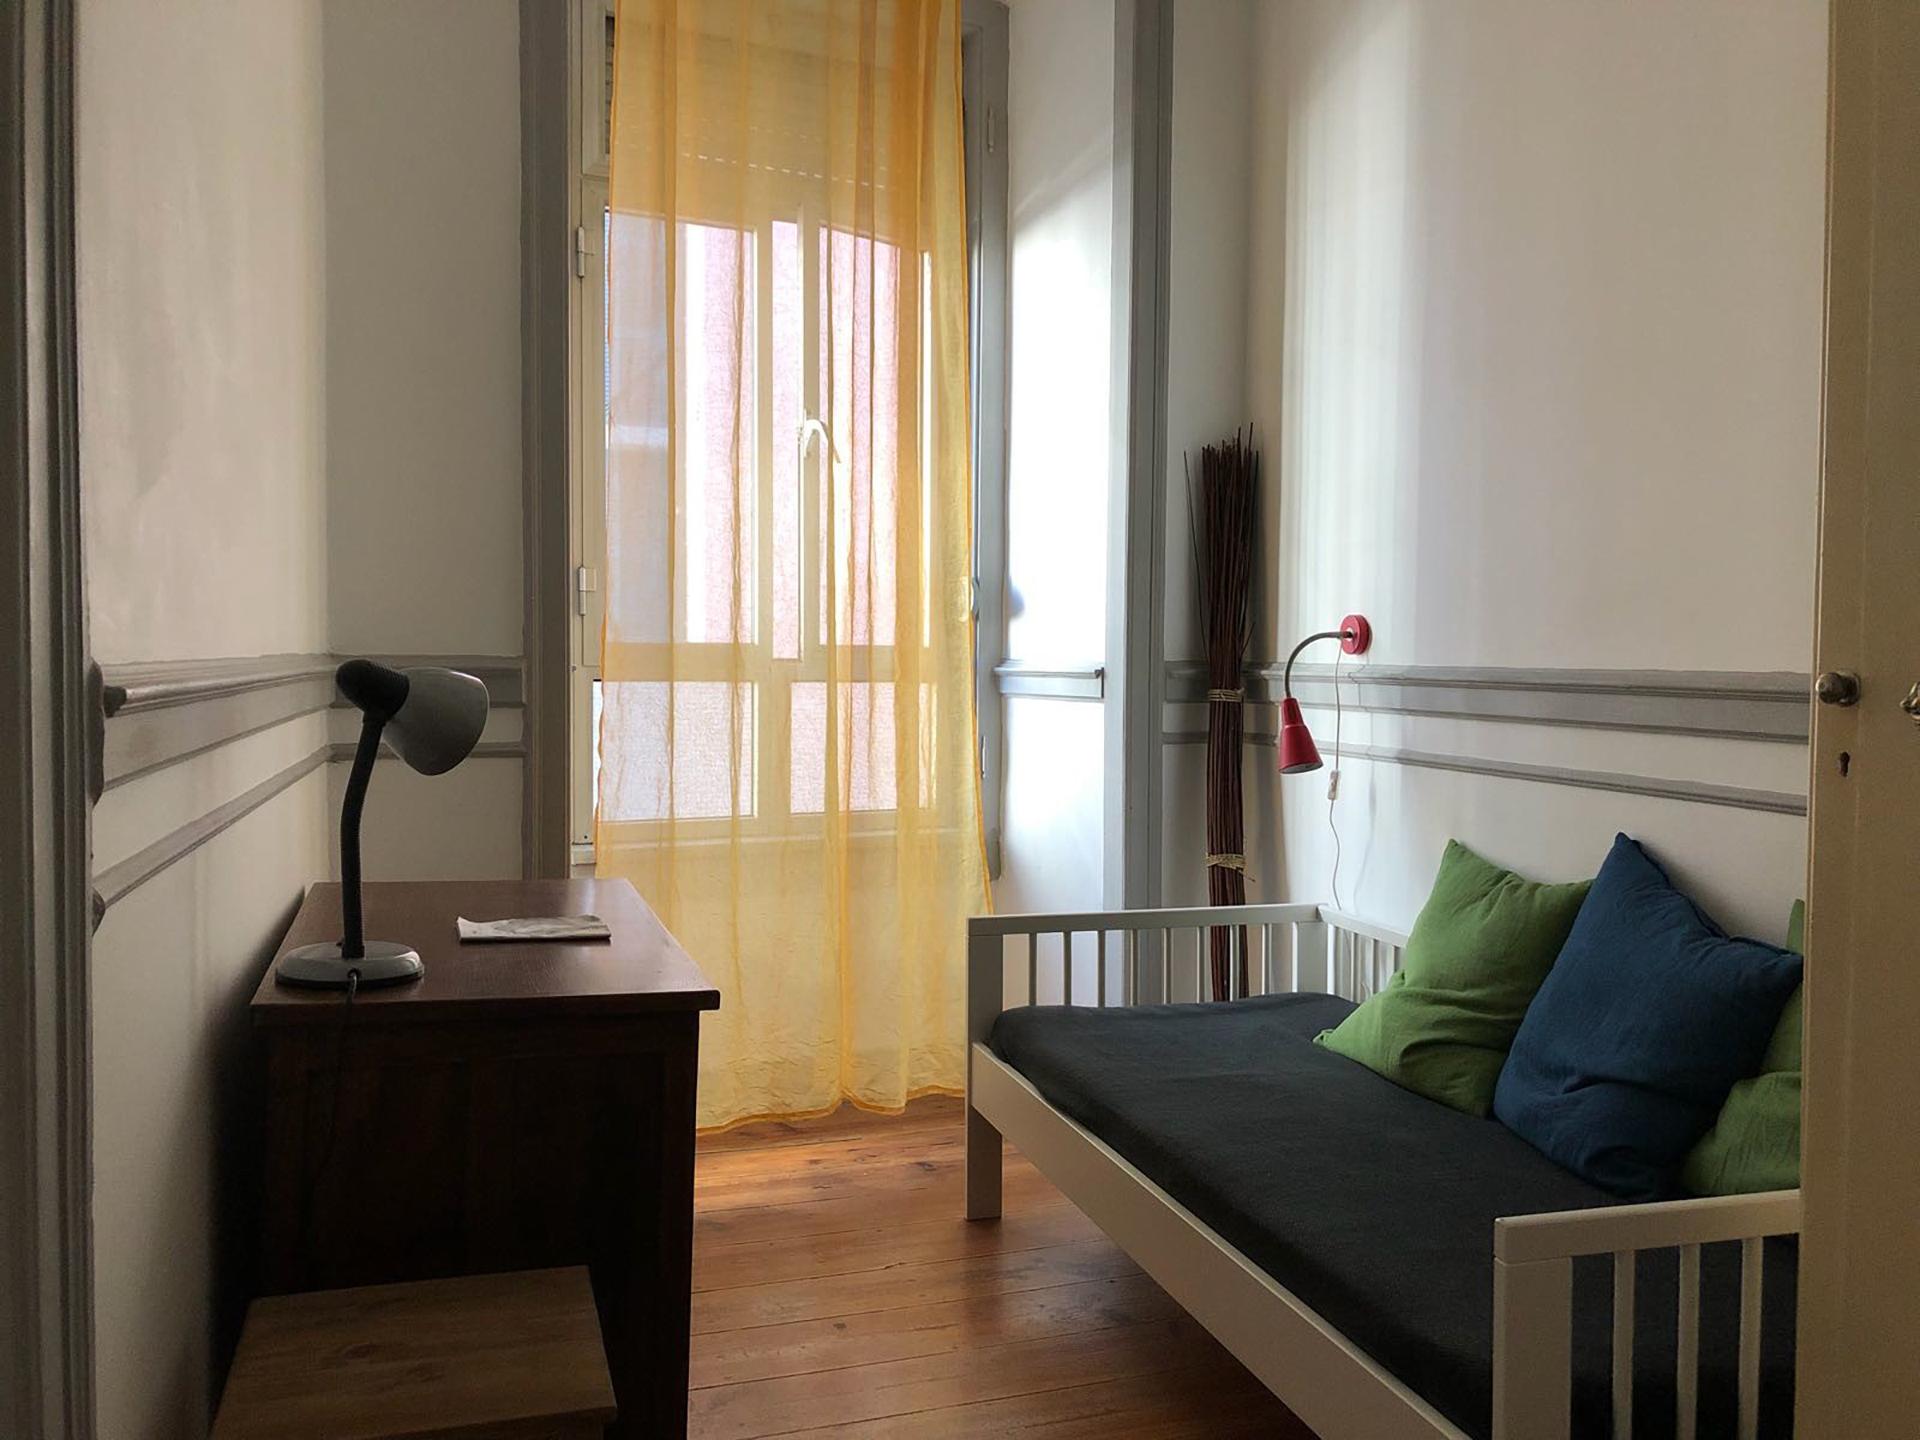 Loureiro - 2 bedroom flat in Lisbon